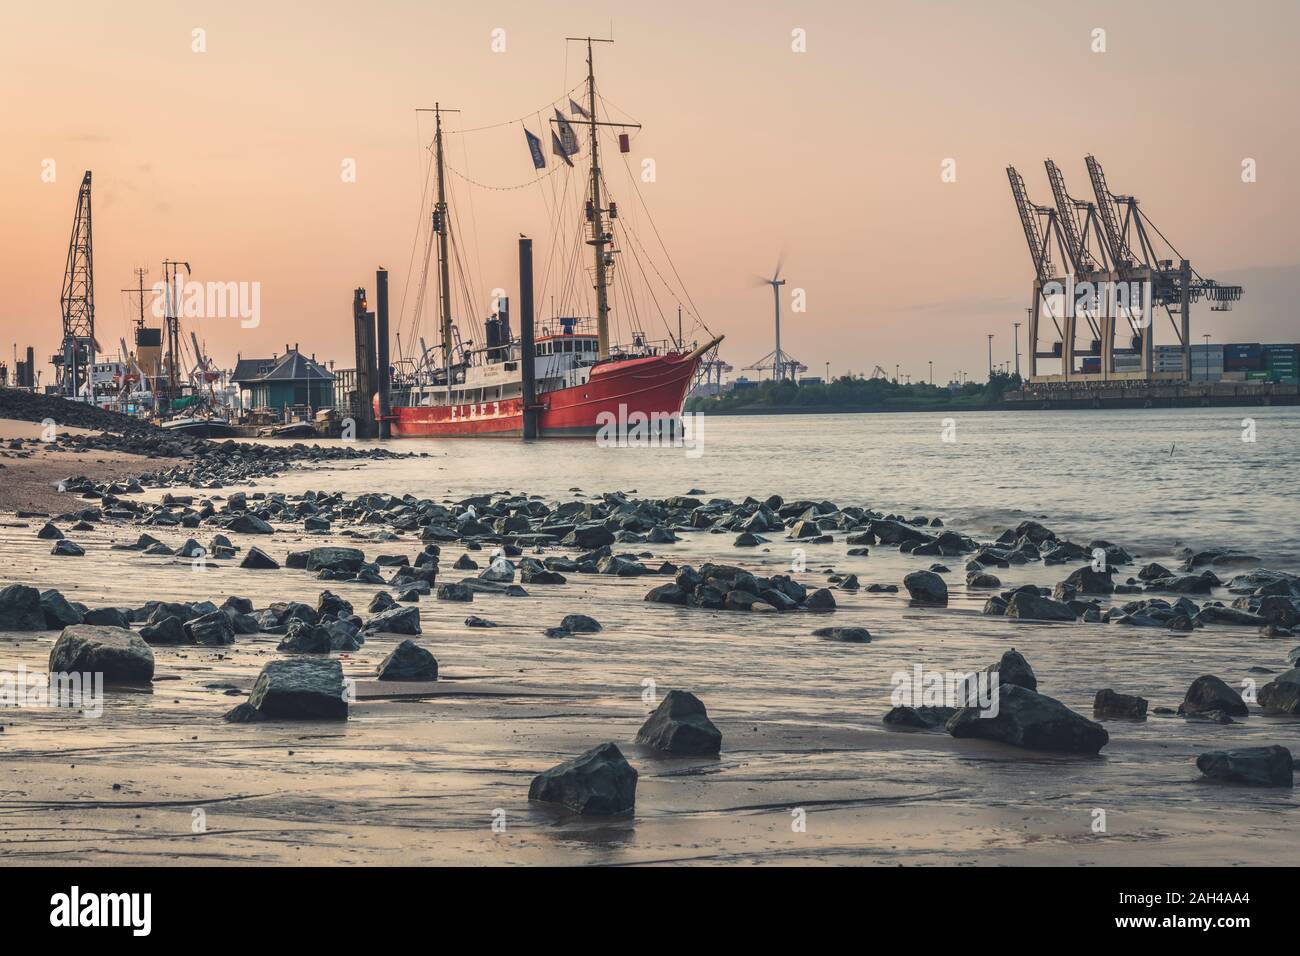 Alemania, Hamburgo, puerto Ovelgonne con marea baja. Foto de stock